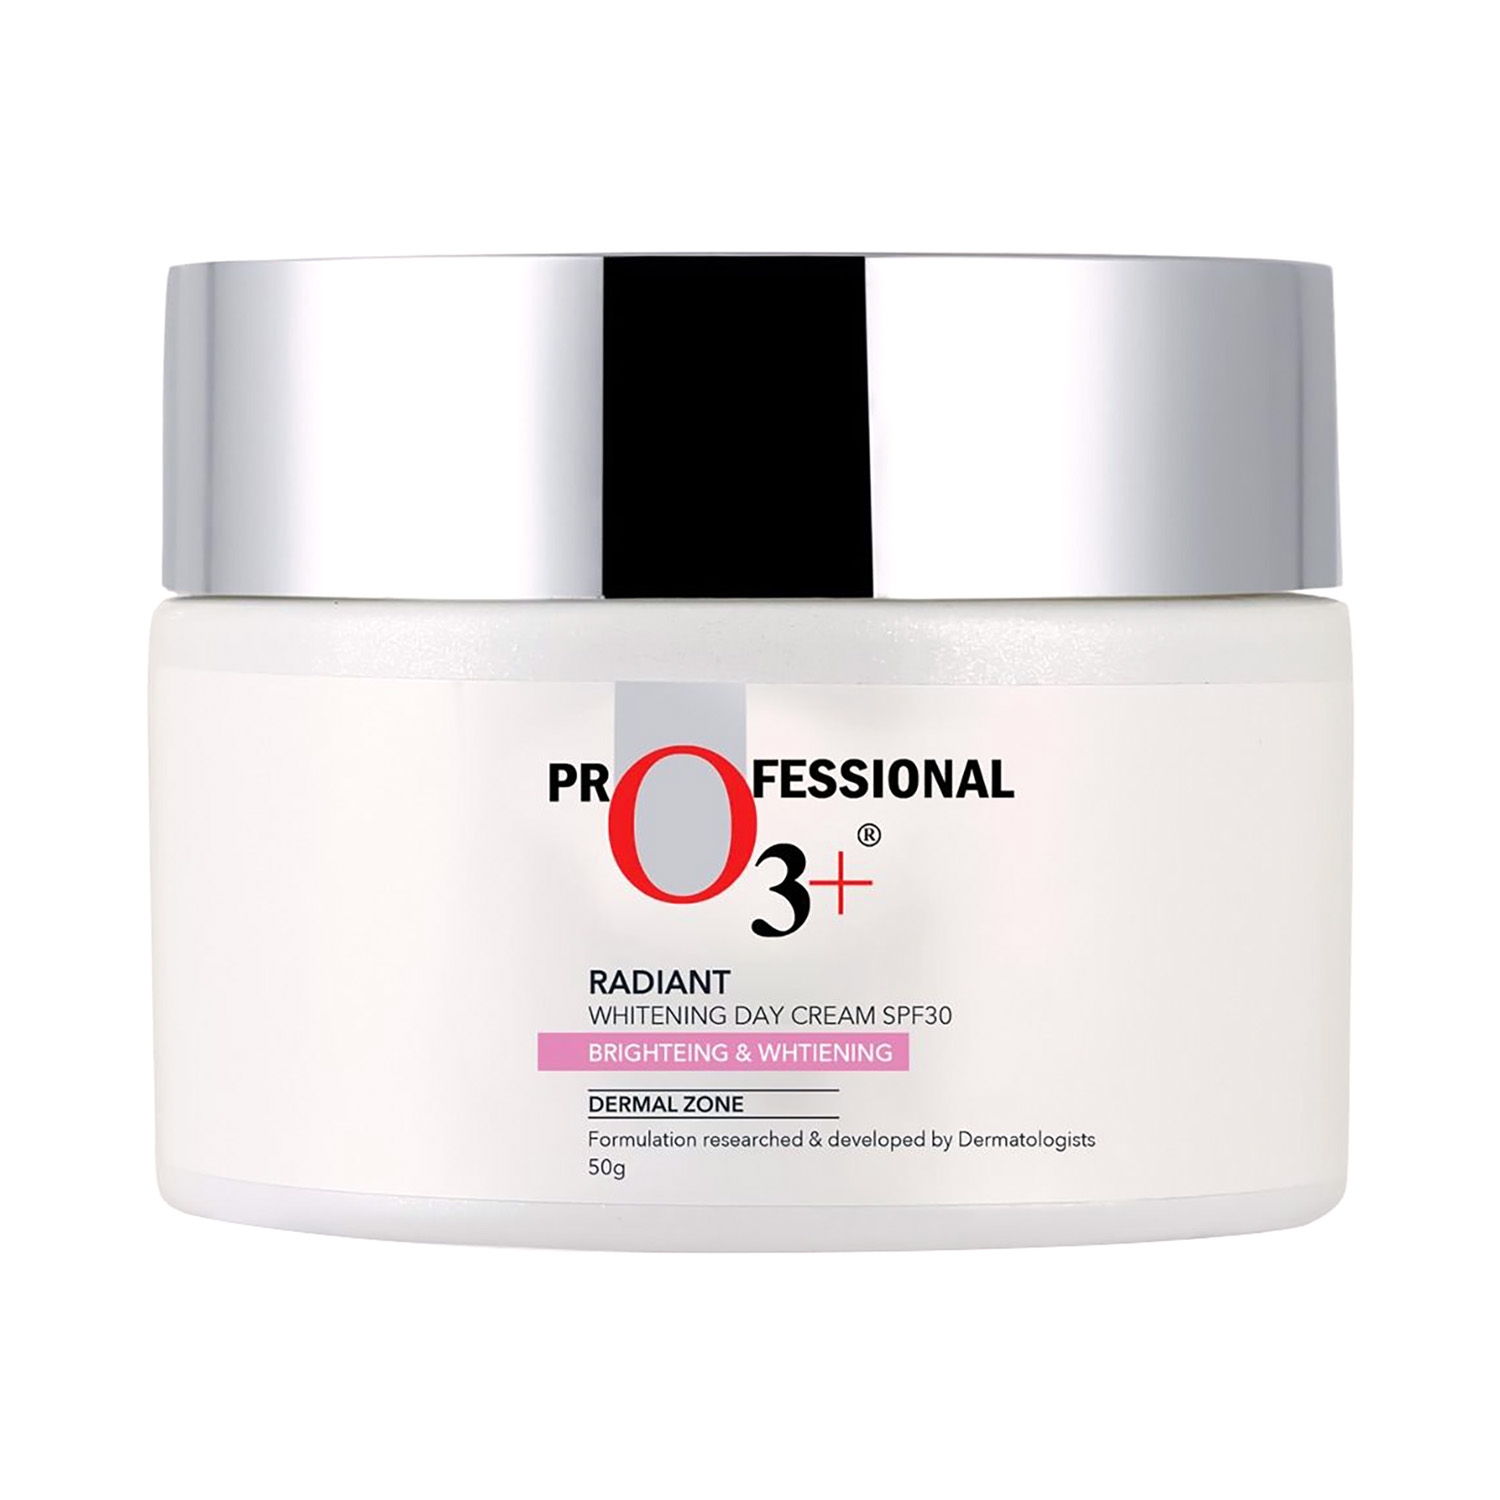 O3+ Professional Dermal Zone SPF 30 Radiant Whitening Day Cream (50g)